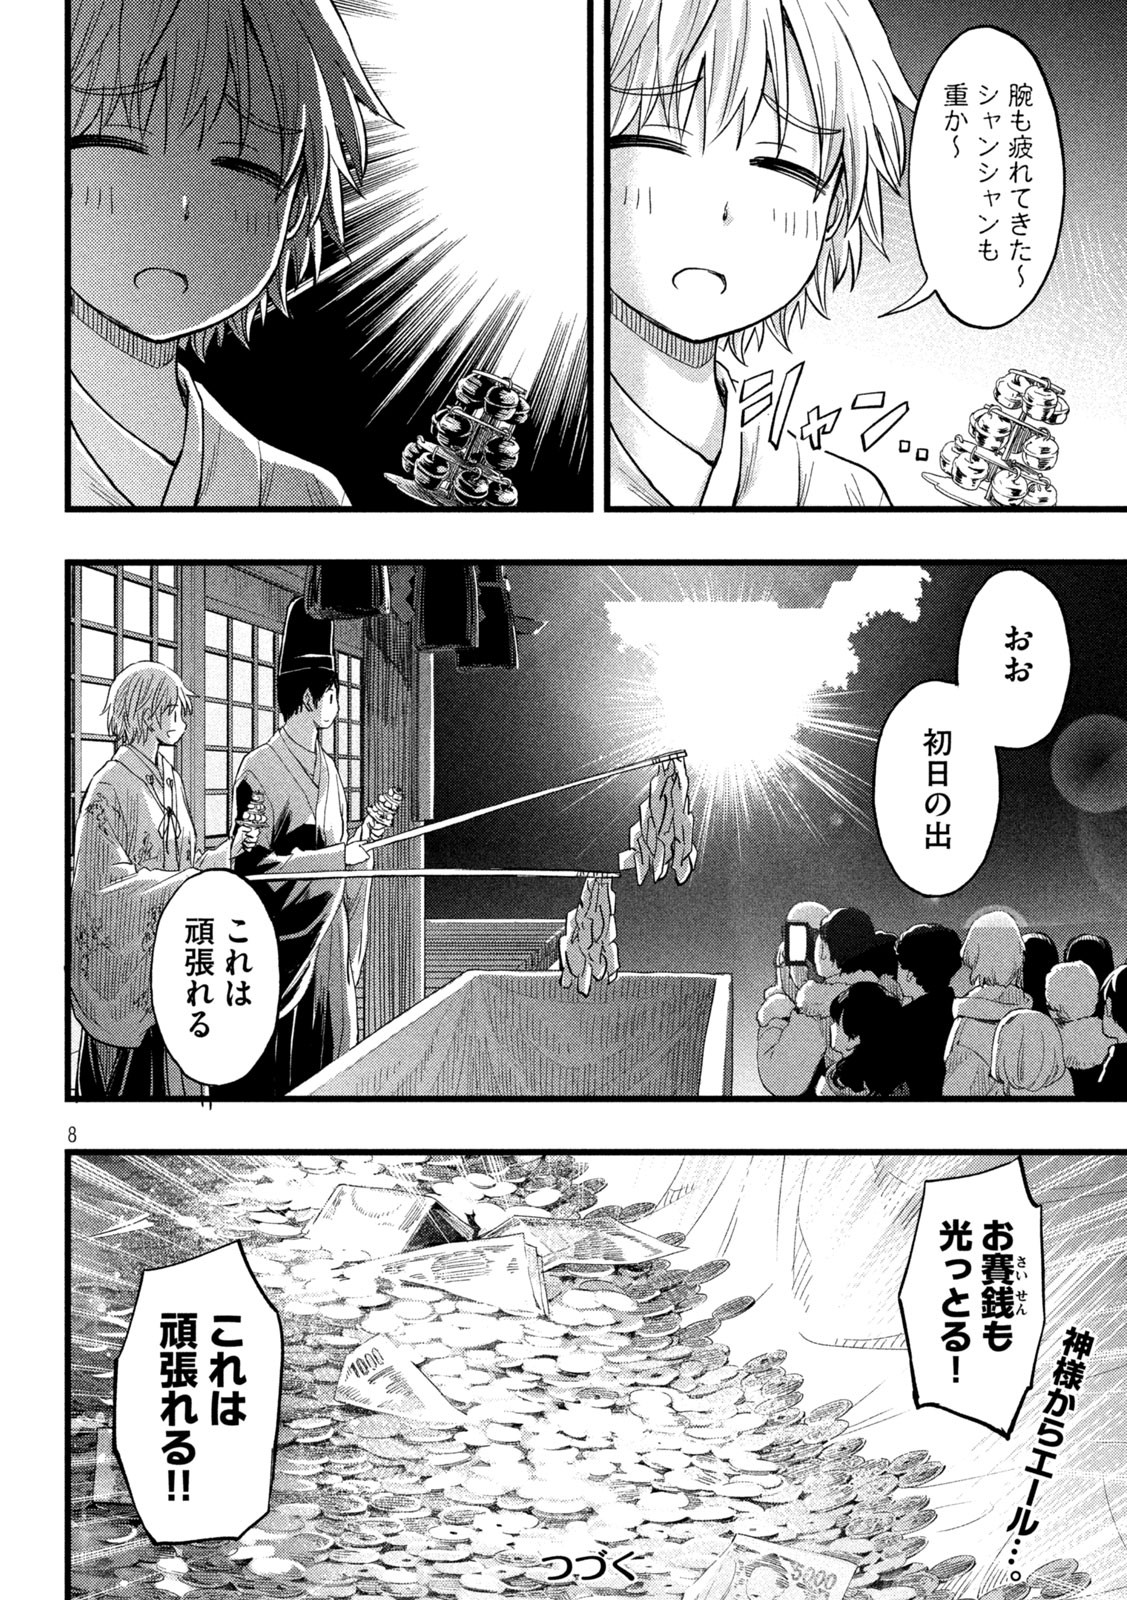 Koharu haru! - Chapter 78 - Page 4